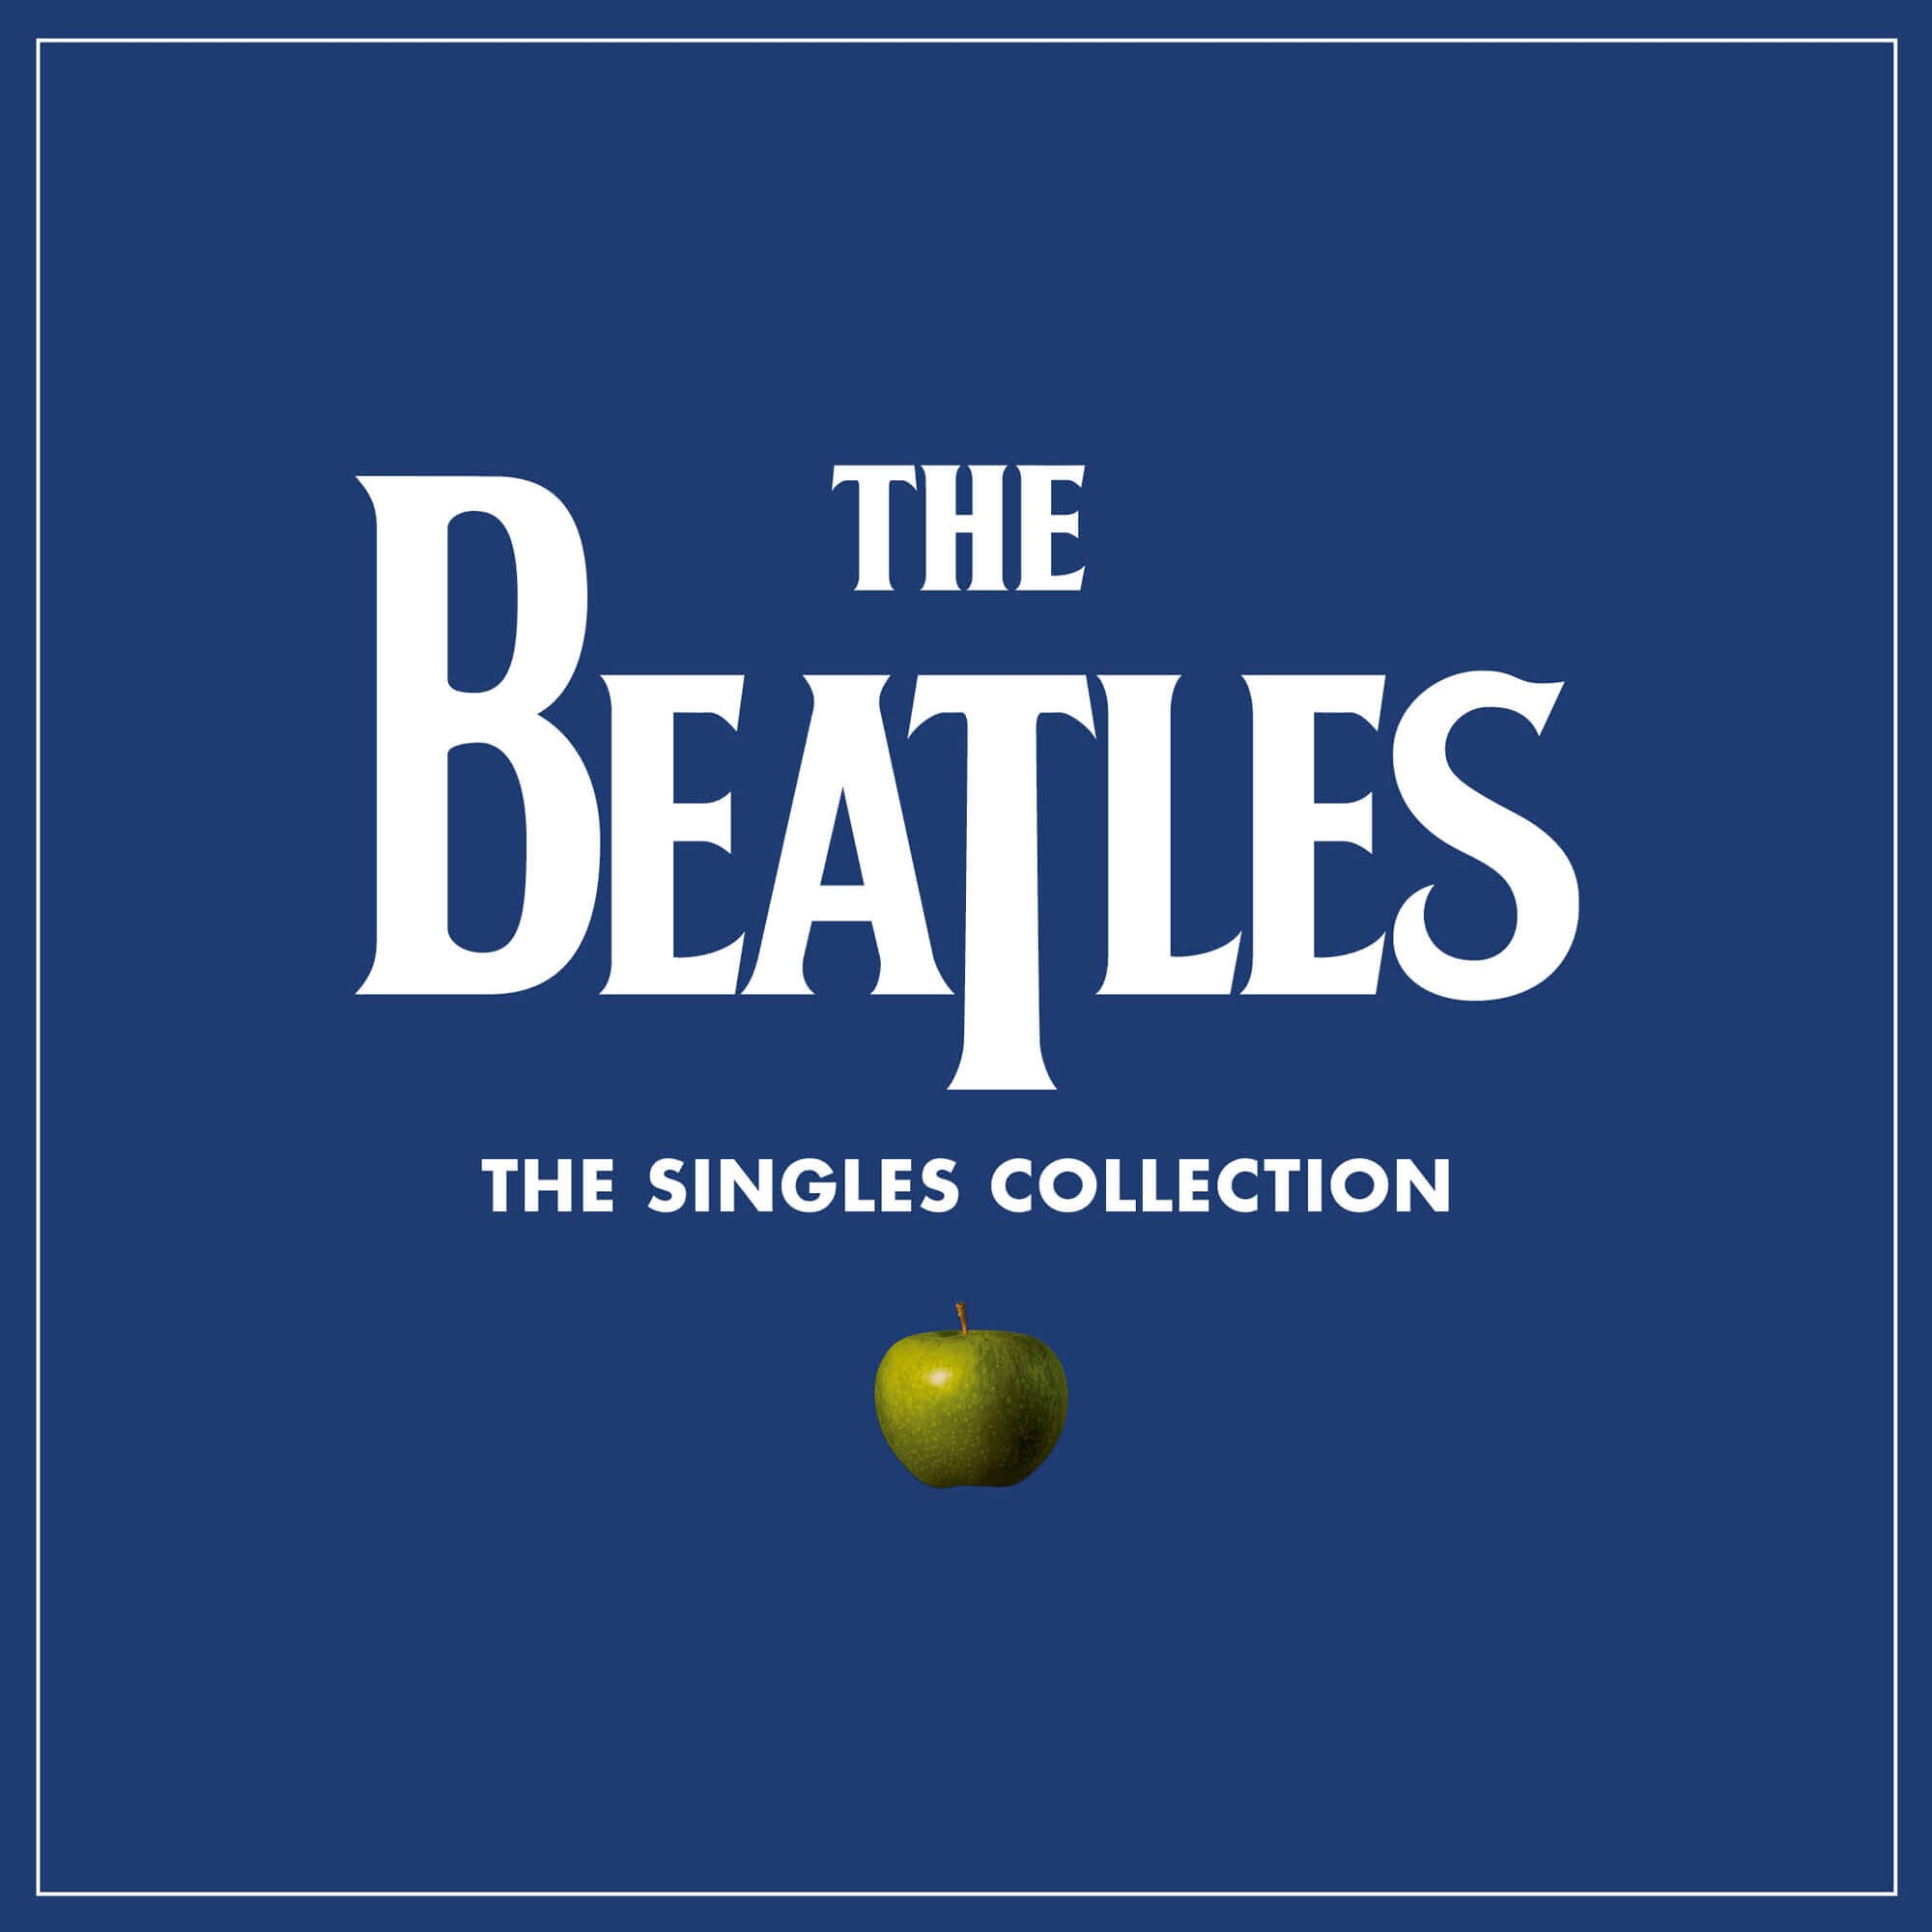 https://images.bravado.de/prod/product-assets/product-asset-data/beatles-the/the-beatles-international-1/products/131348/web/293086/image-thumb__293086__3000x3000_original/The-Beatles-The-Singles-Collection-Ltd-7-Vinyl-Boxset-Boxsets-131348-293086.jpg